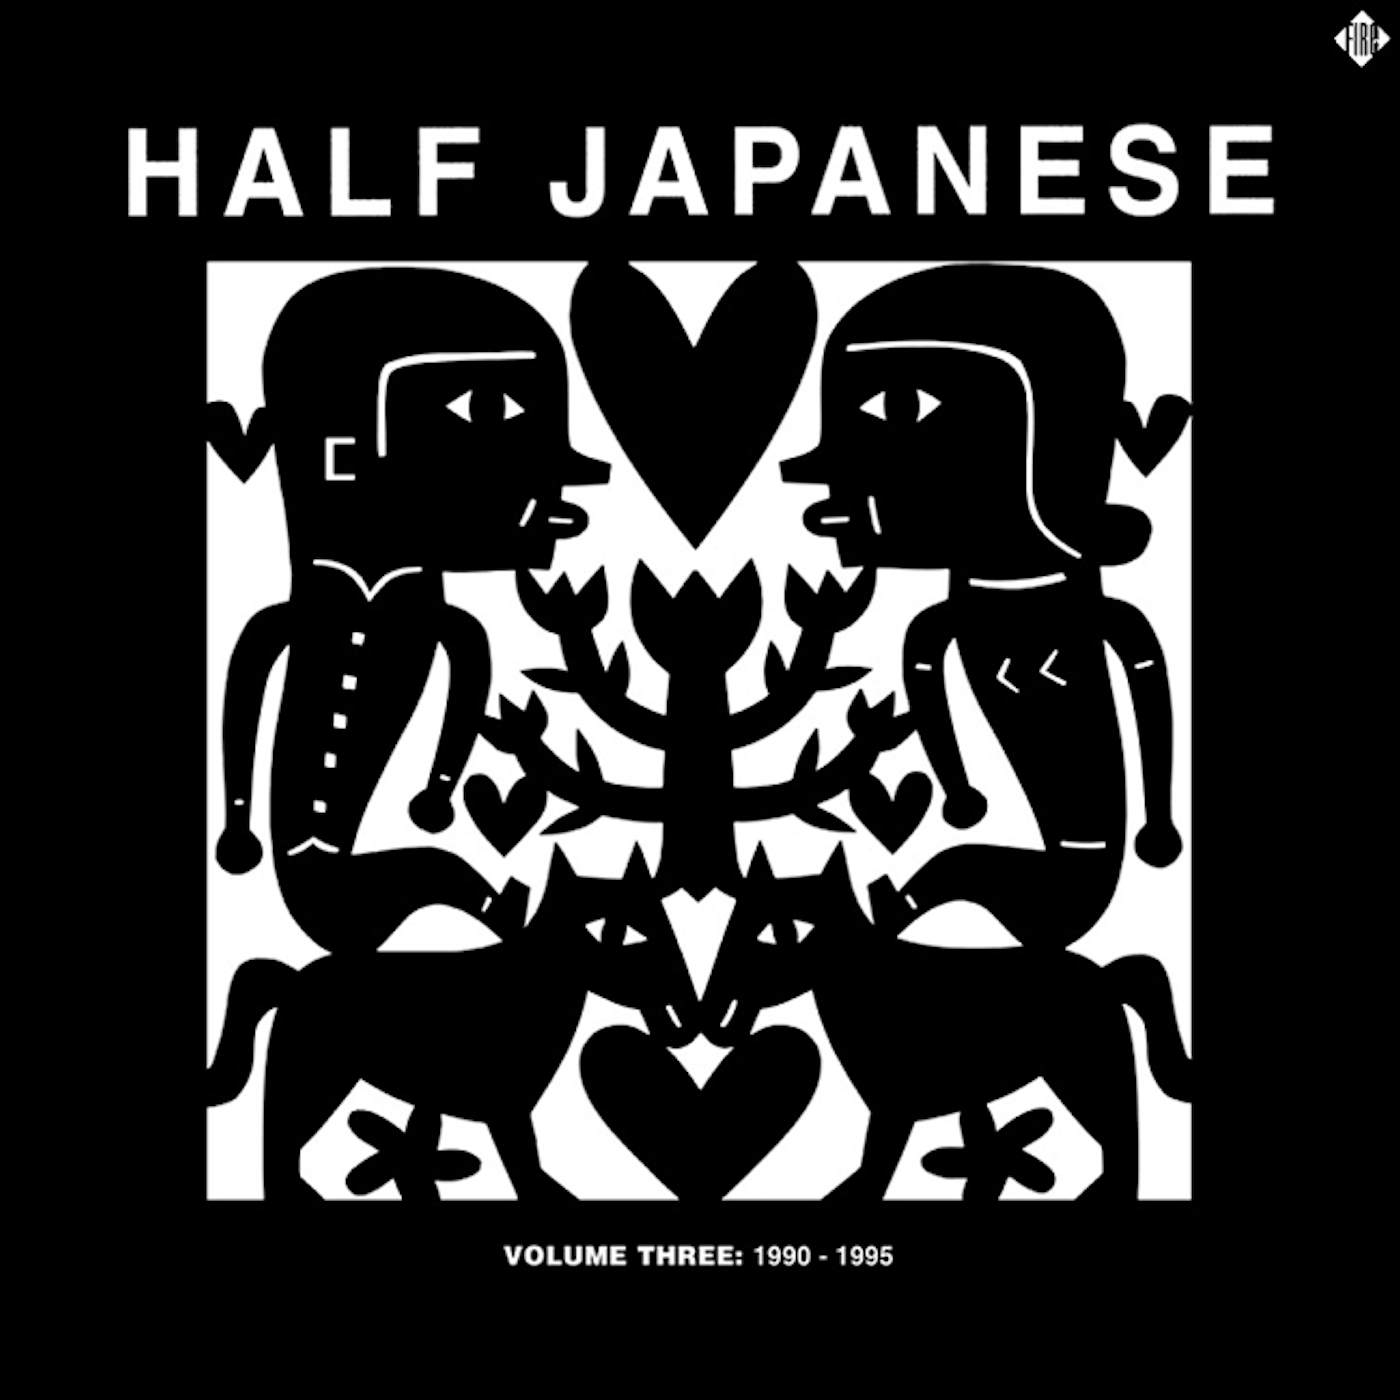 Half Japanese VOLUME 3: 1990-95 CD